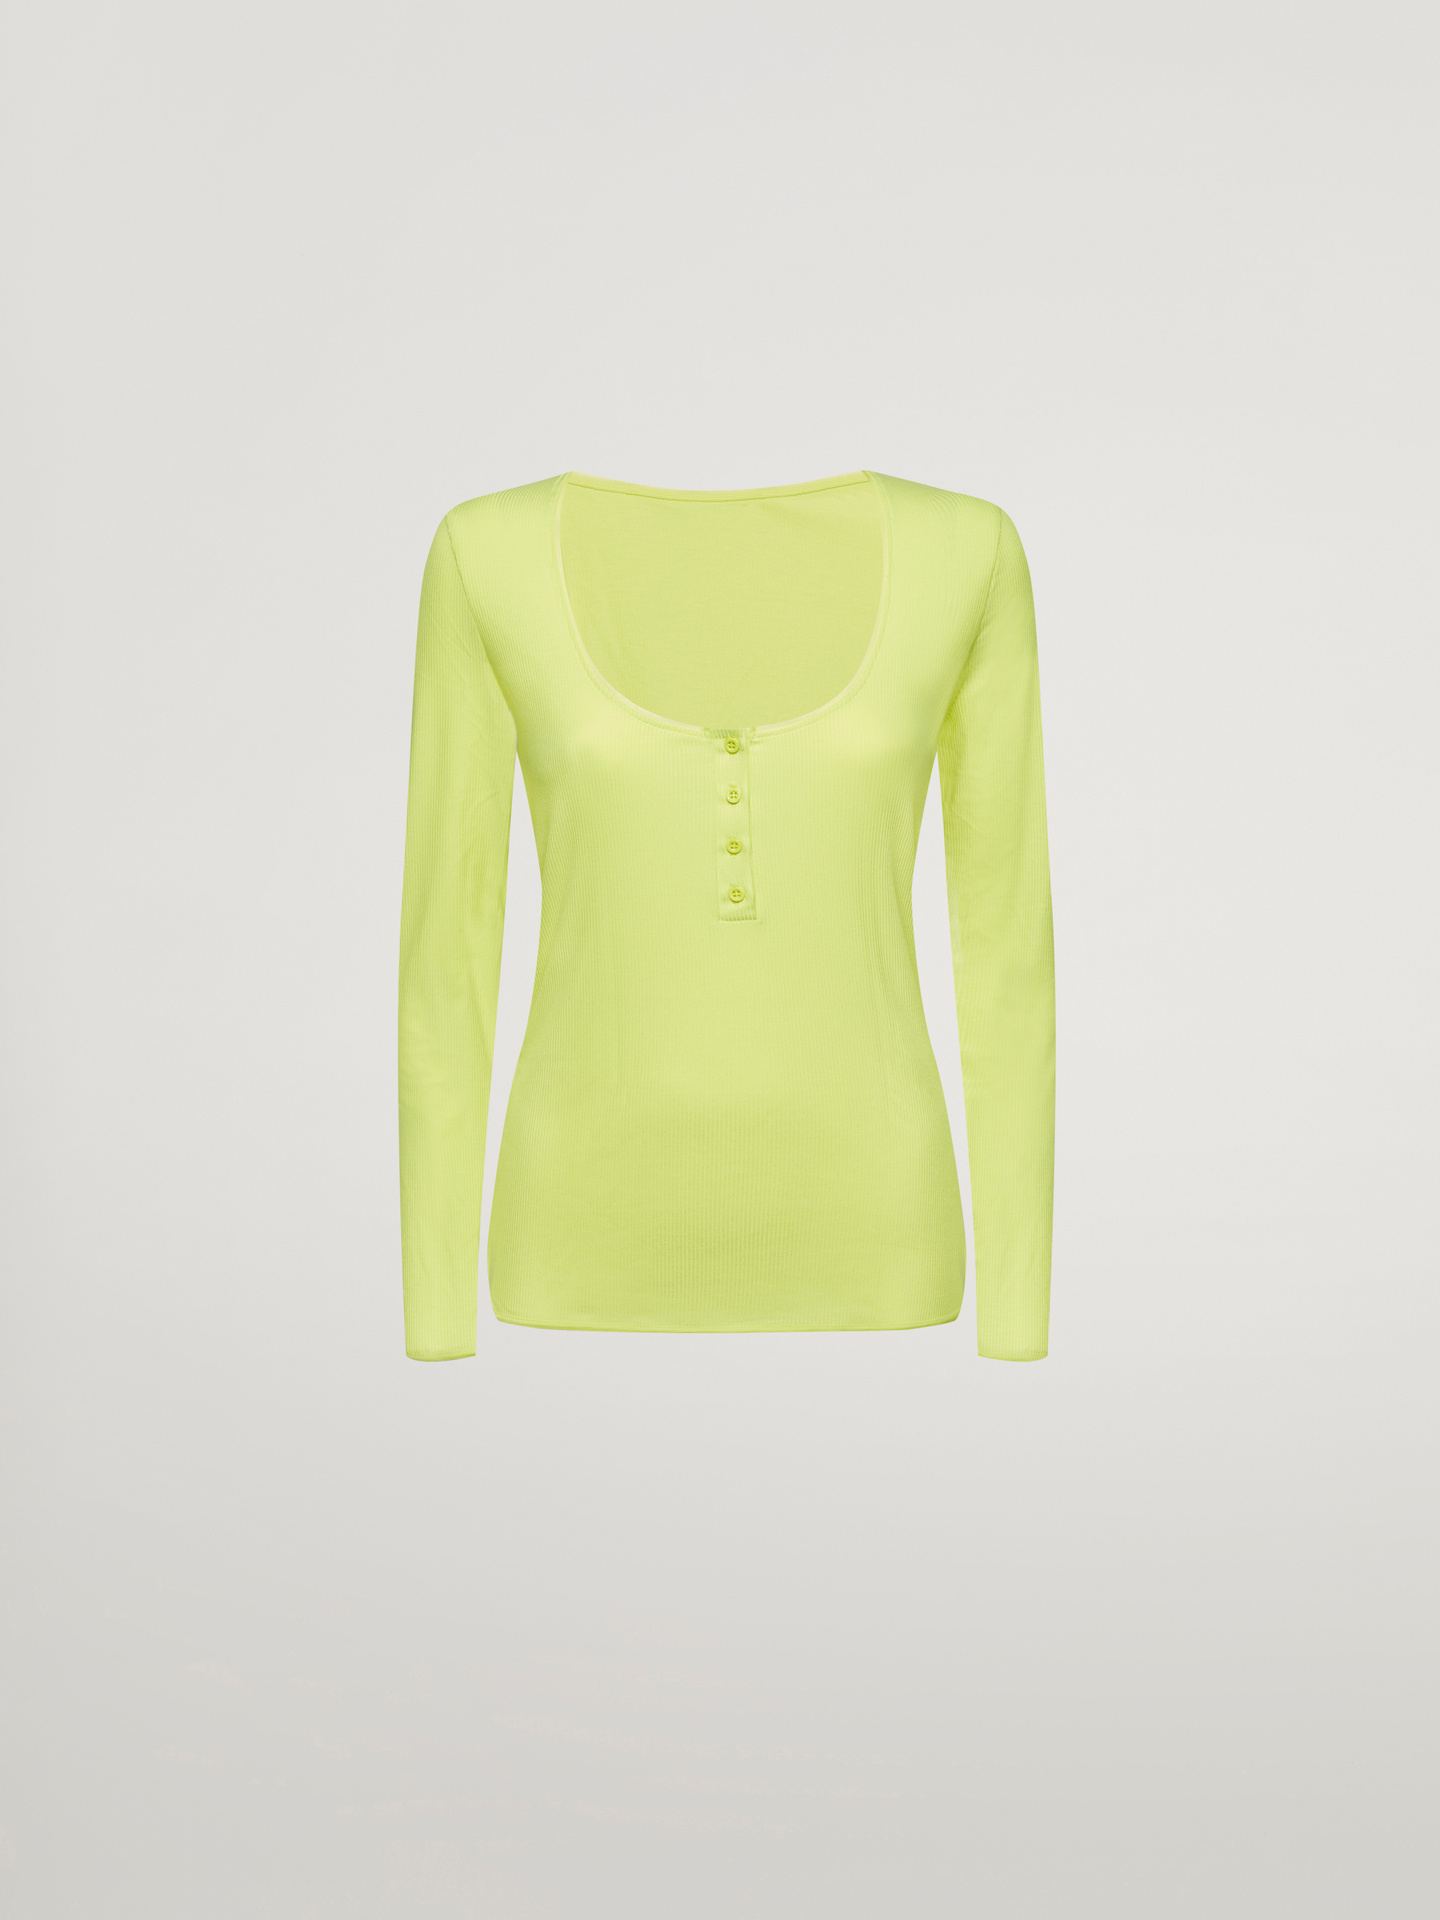 Wolford - Henley Top Long Sleeves, Frau, paradise green, Größe: XS günstig online kaufen